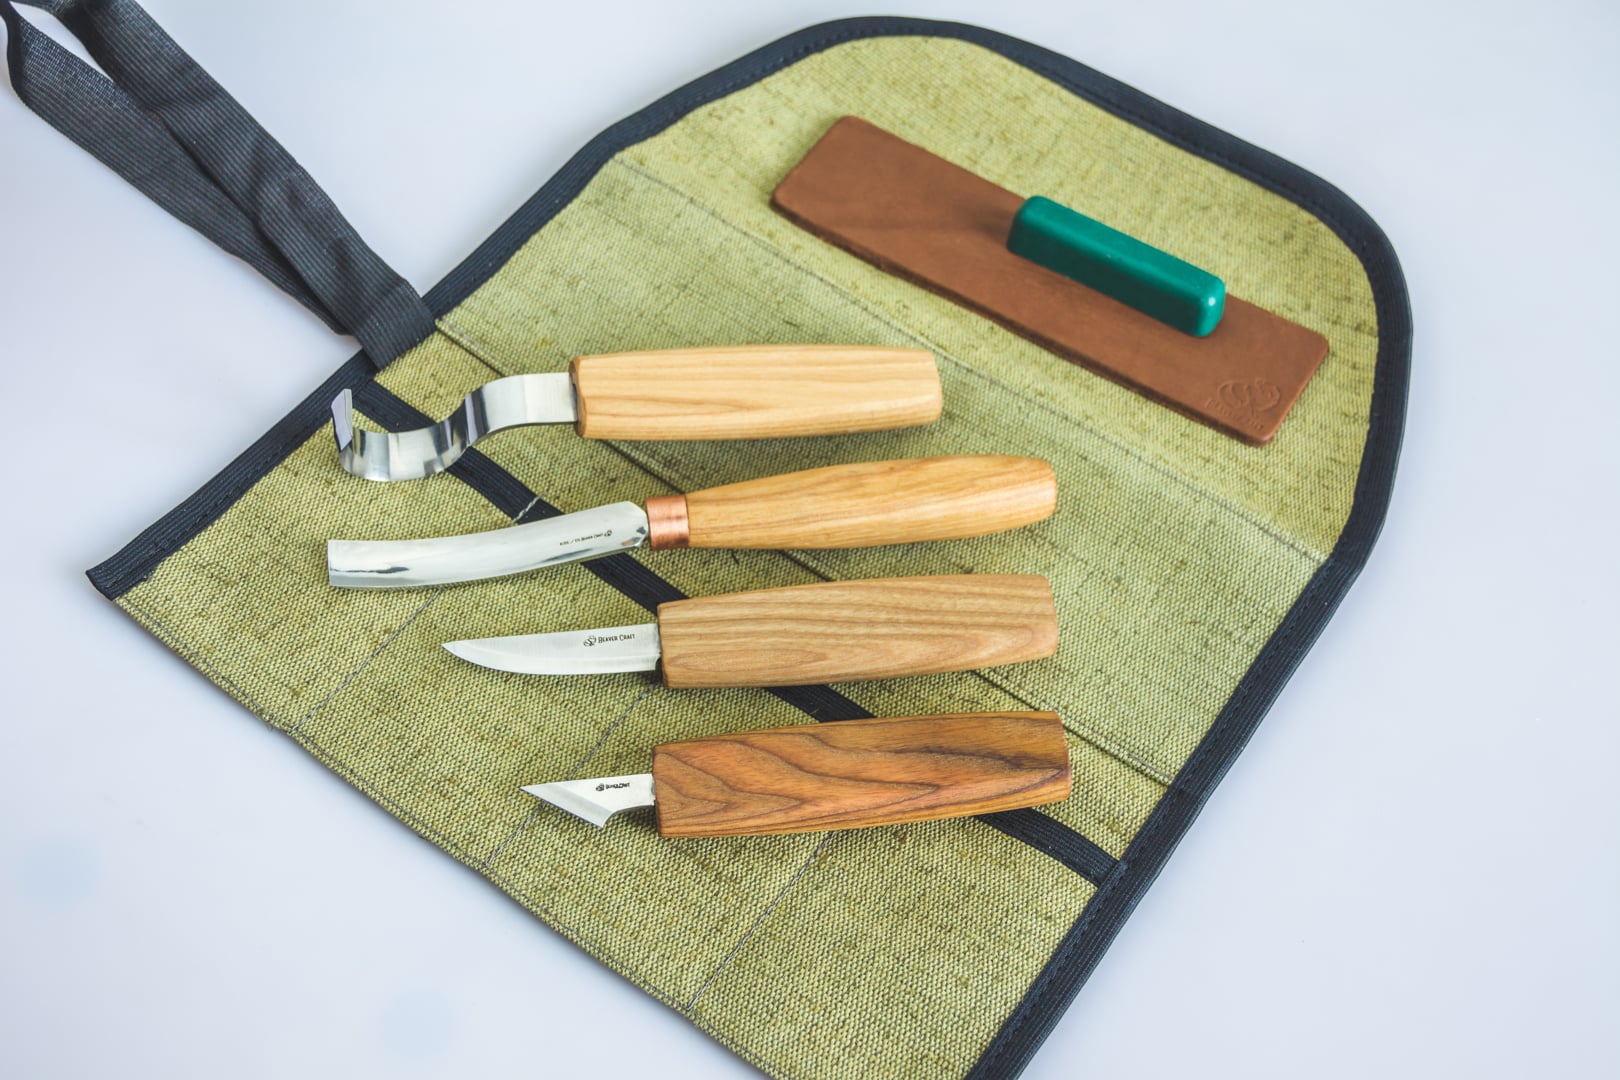 Left-Handed Handmade Cherrywood Cooking Tools, 4 Pieces